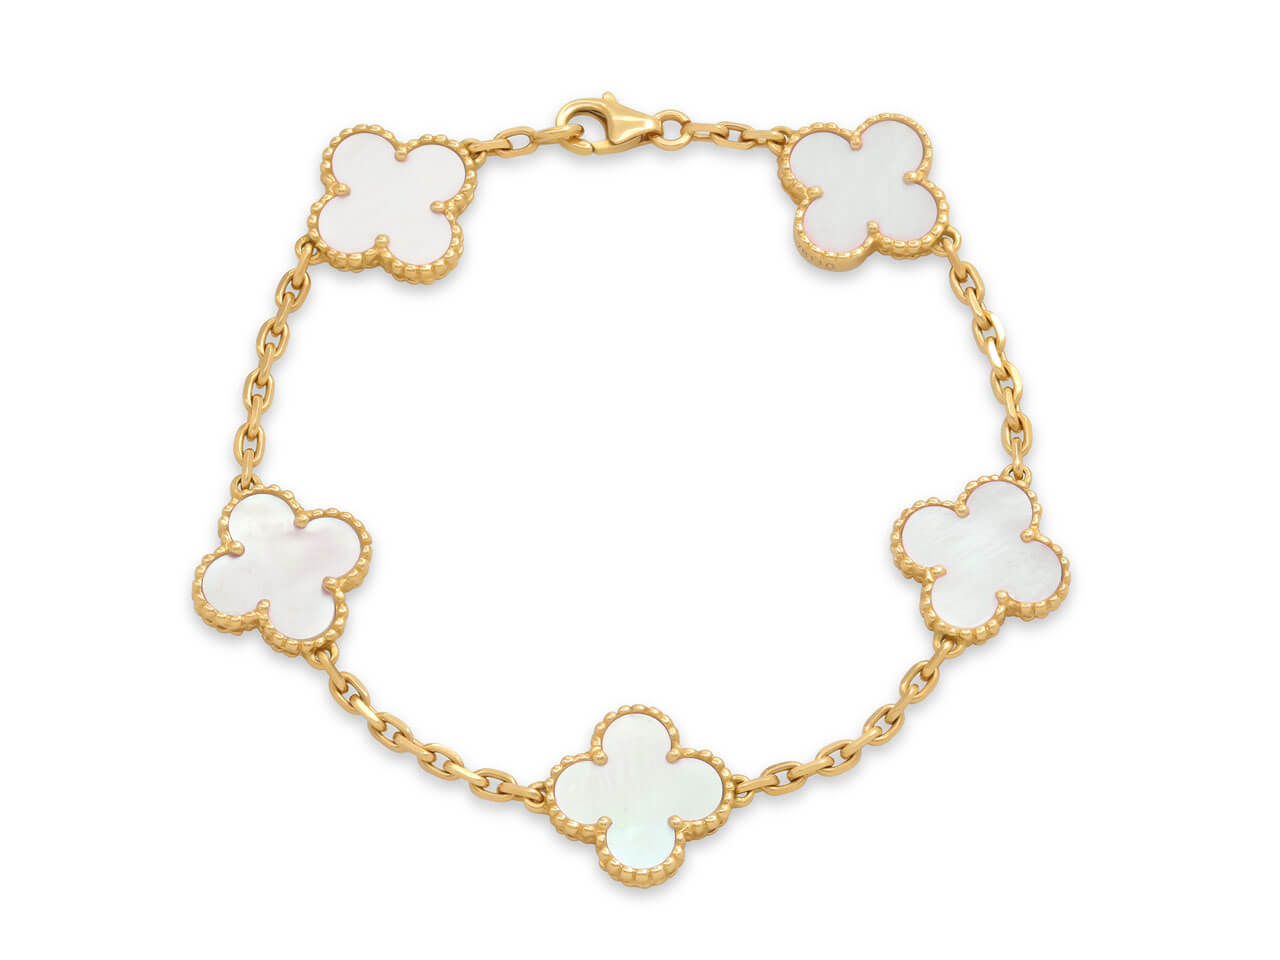 Van Cleef & Arpels 'Vintage Alhambra' 5 Motif Mother-of-Pearl Bracelet in 18K Gold